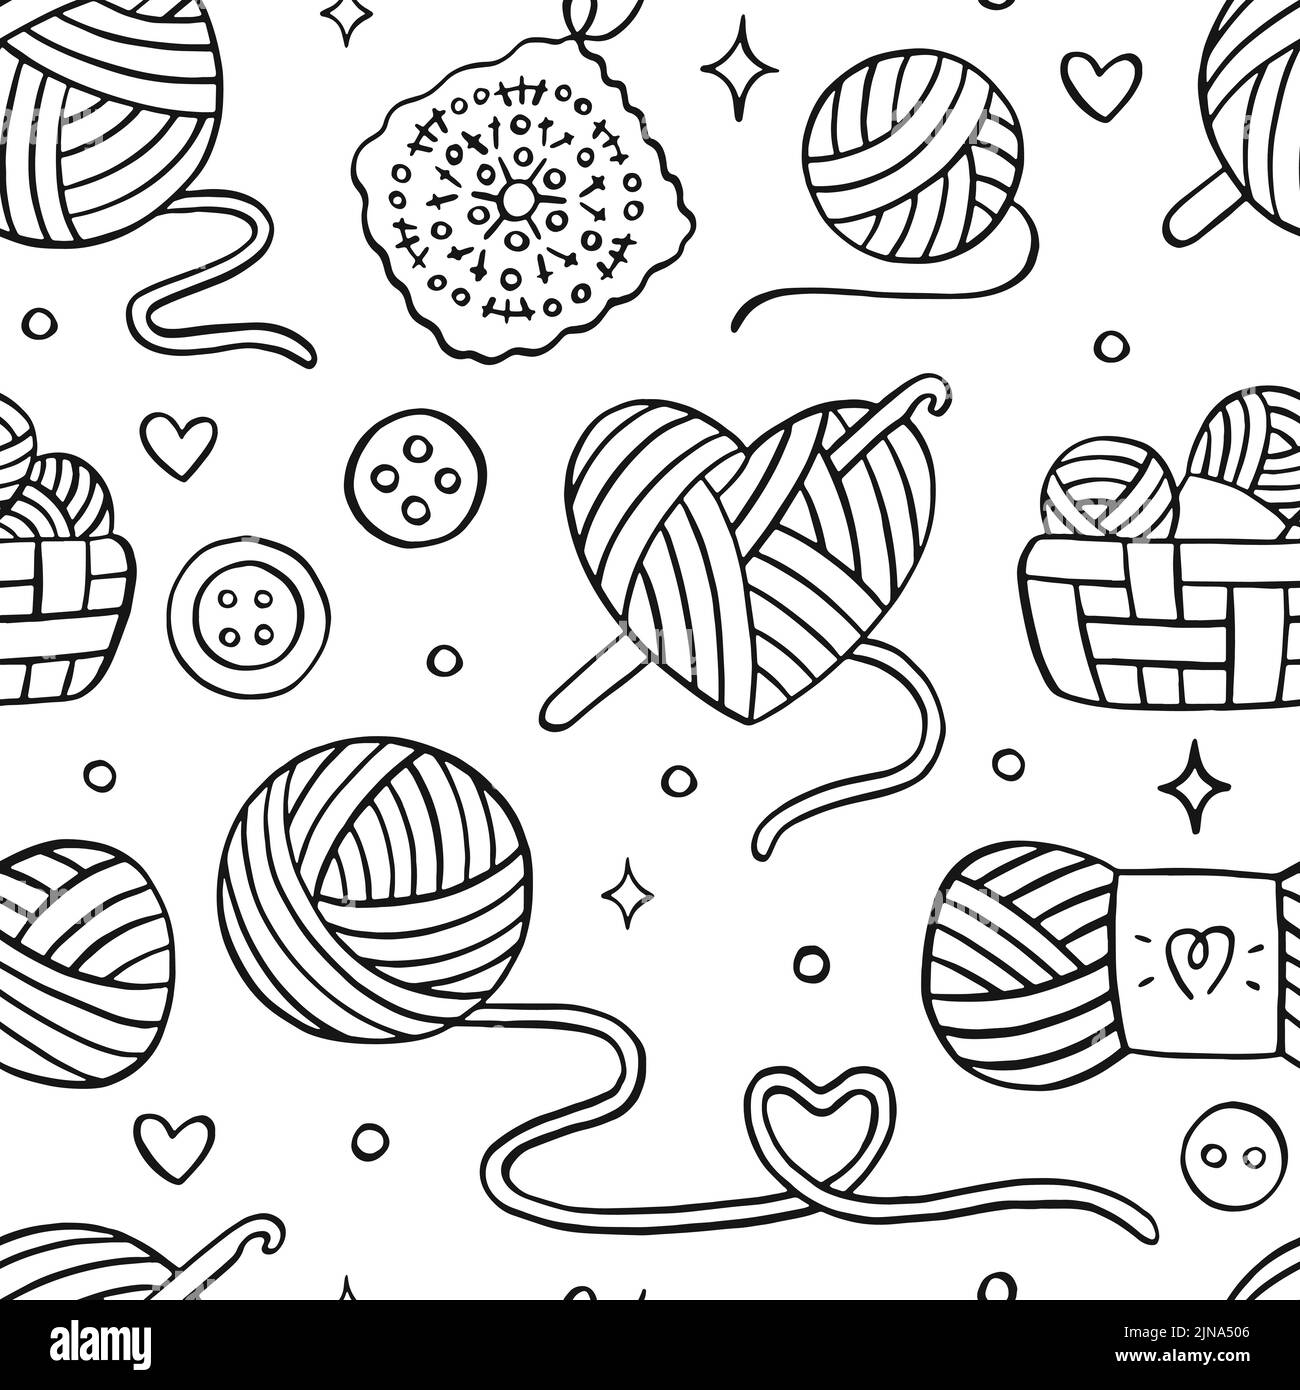 Crochet hook icon black background Black and White Stock Photos & Images -  Alamy